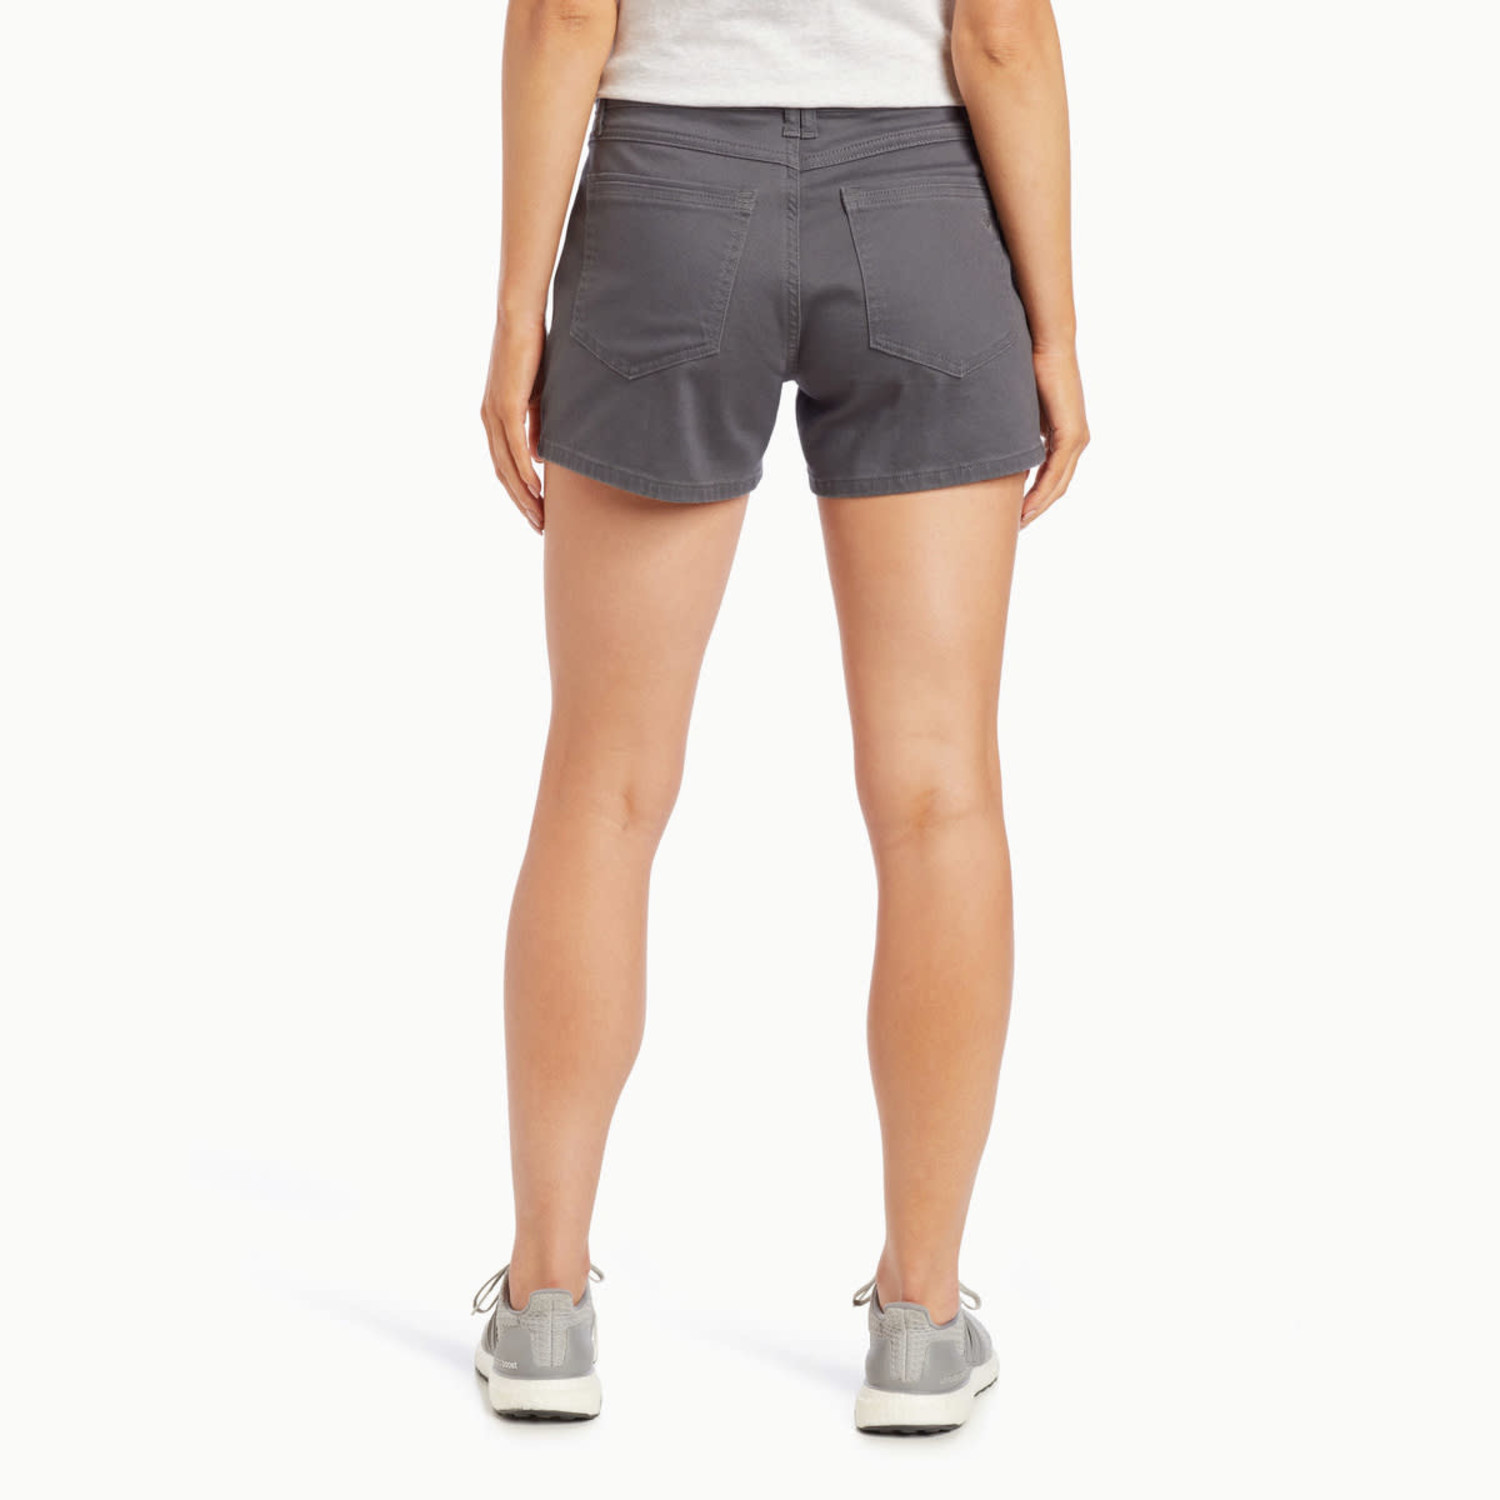 KuhlTrekr Shorts, 11 Inseam - Womens